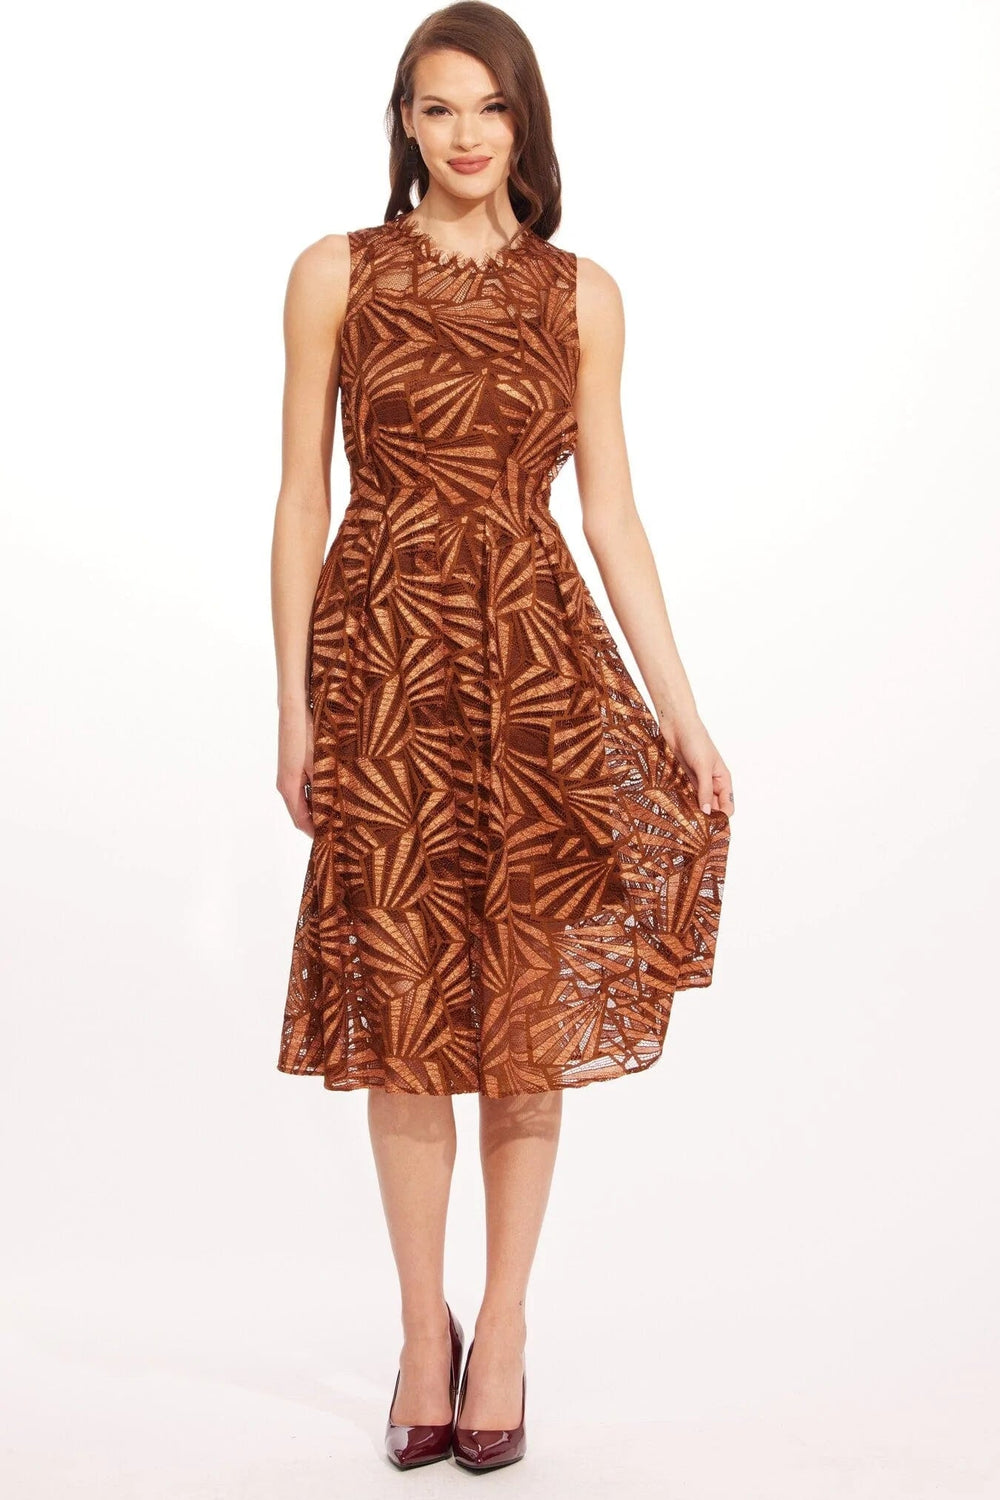 Eva Franco Apparel Eva Franco | Citi Dress in Copper Lace